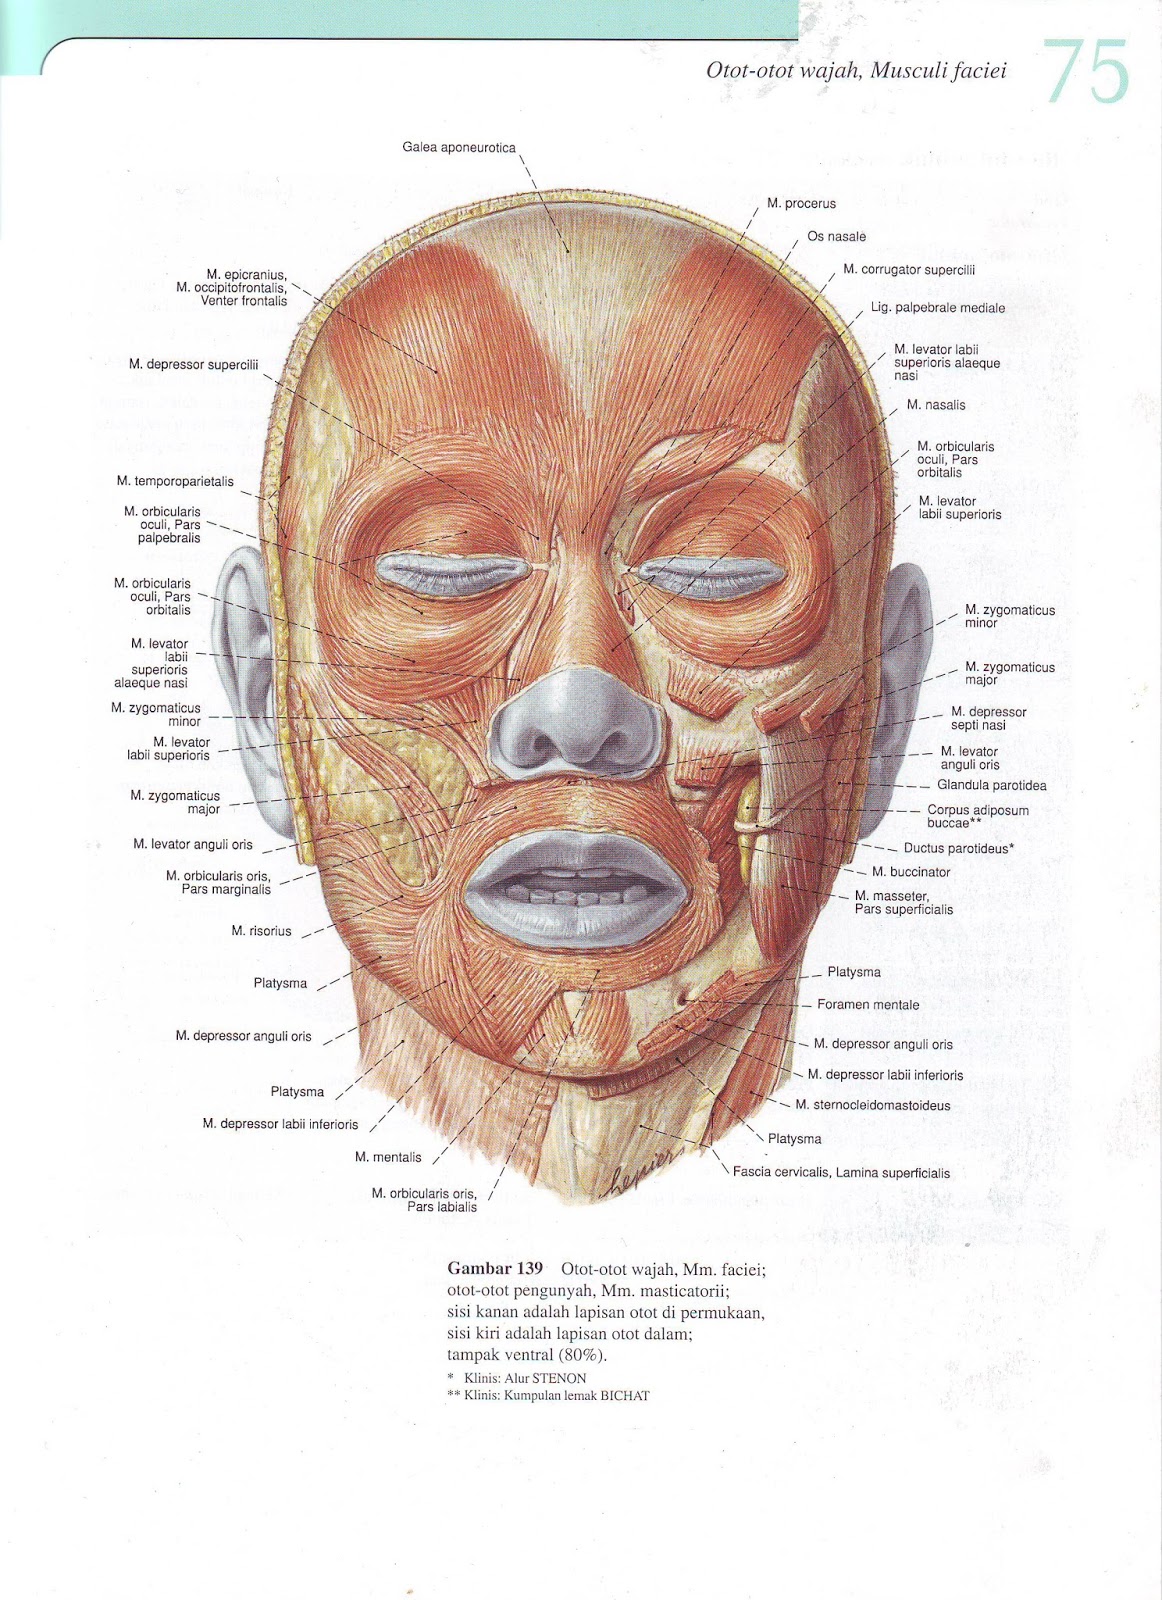 Название лица человека. Мышцы лица. Мышцы лица анатомия. Схема мышц лица человека. Мимические мышцы лица анатомия.